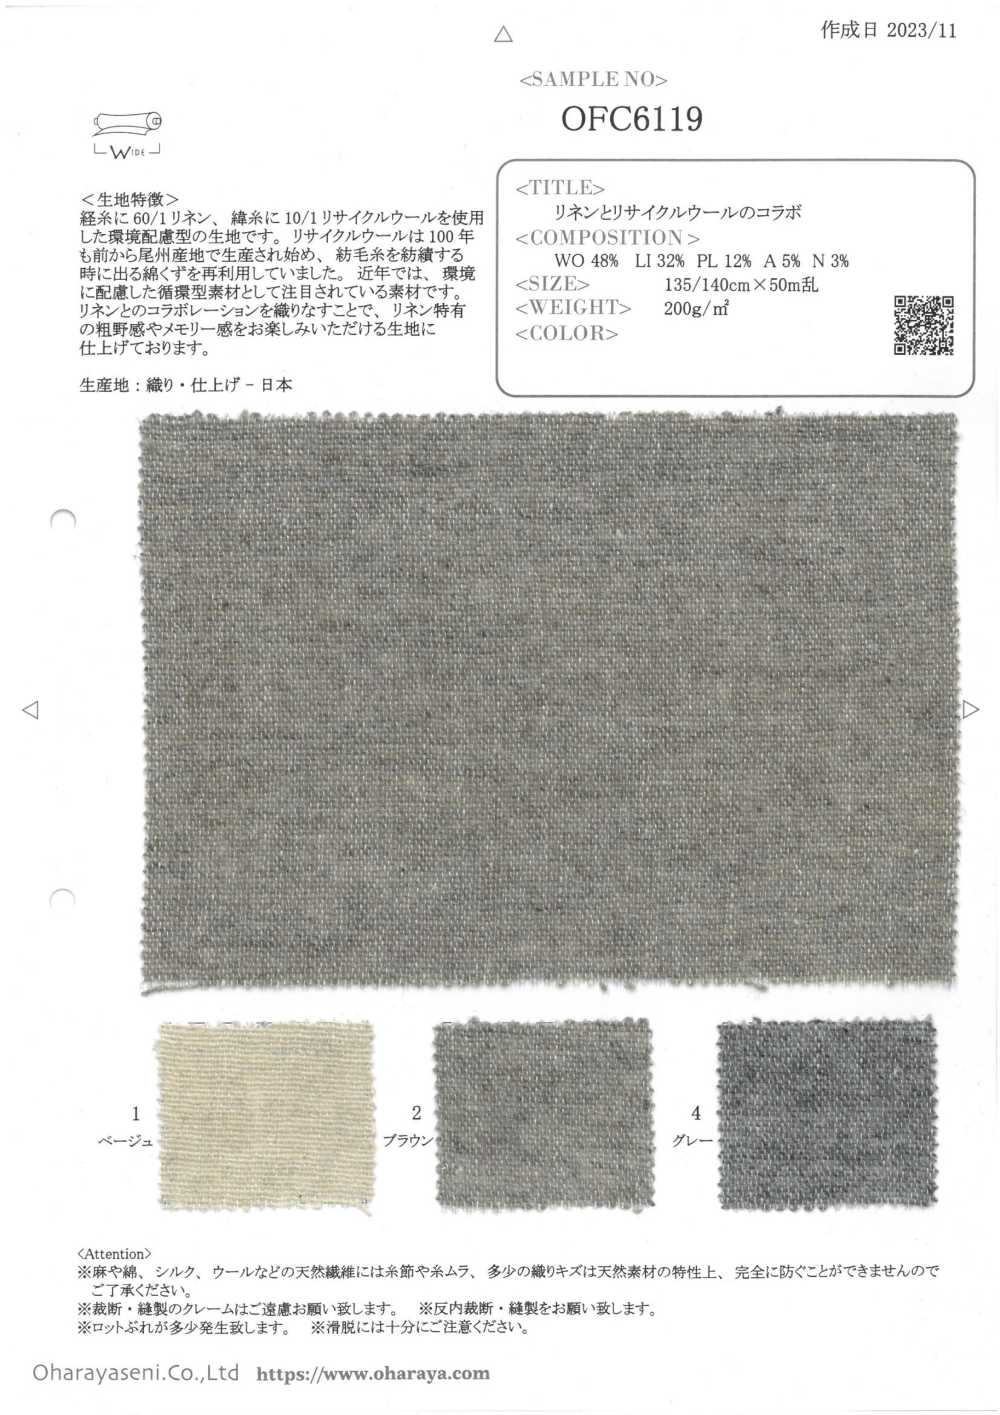 OFC6119 Colaboración De Lino Y Lana Reciclada[Fabrica Textil] Oharayaseni